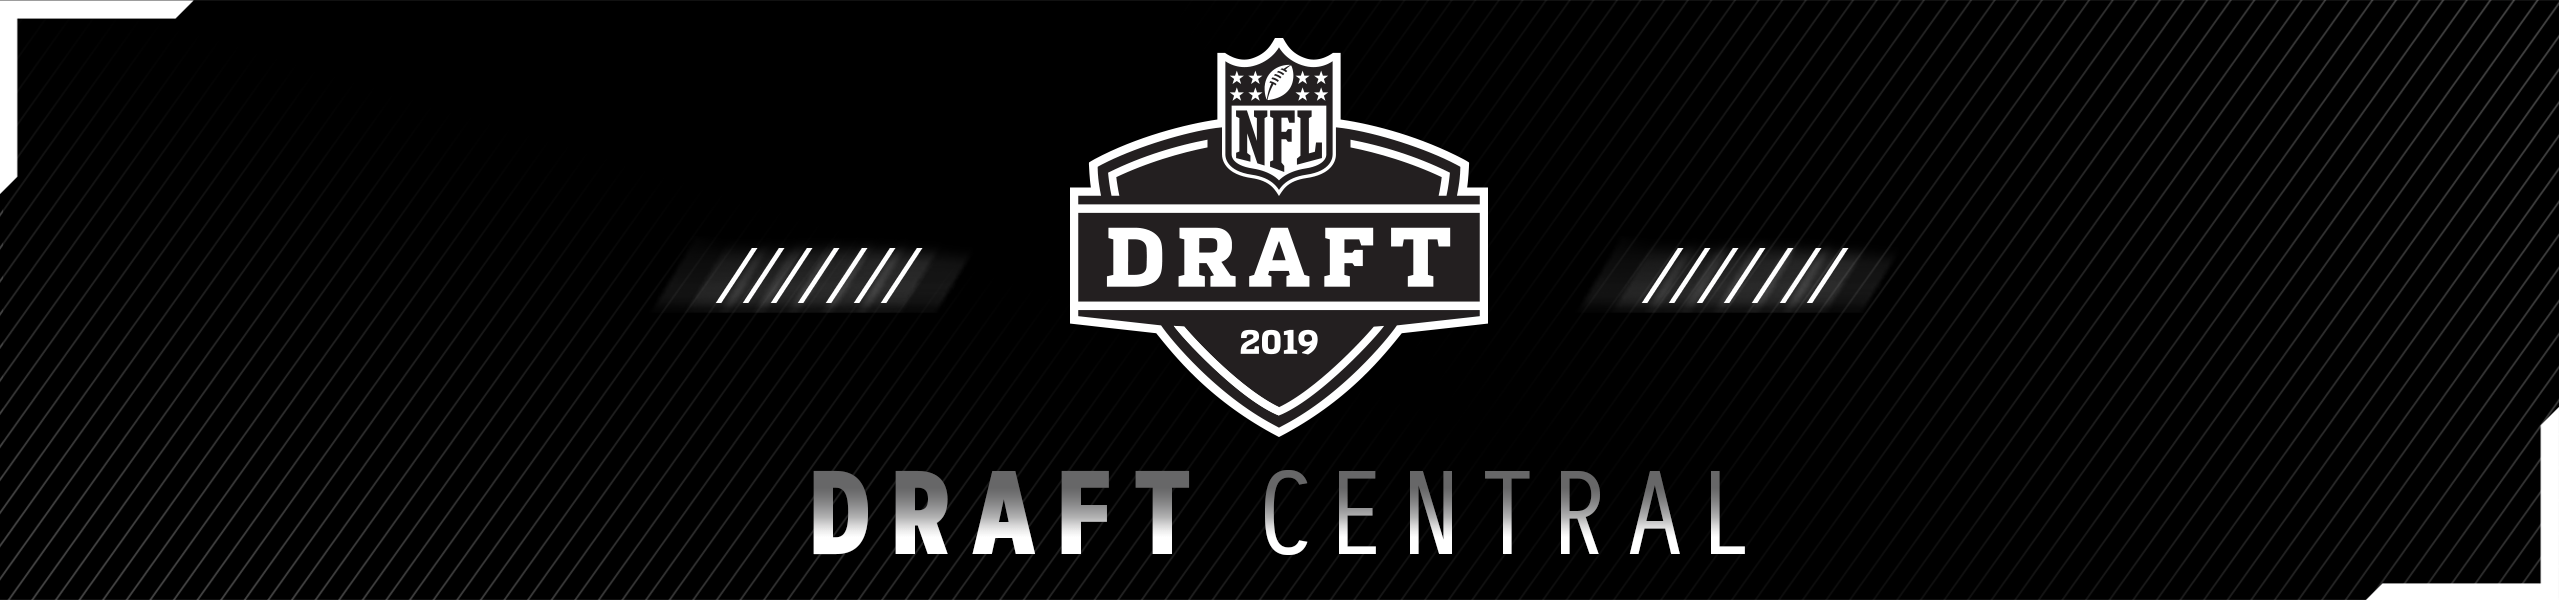 2019 Raiders Draft Central